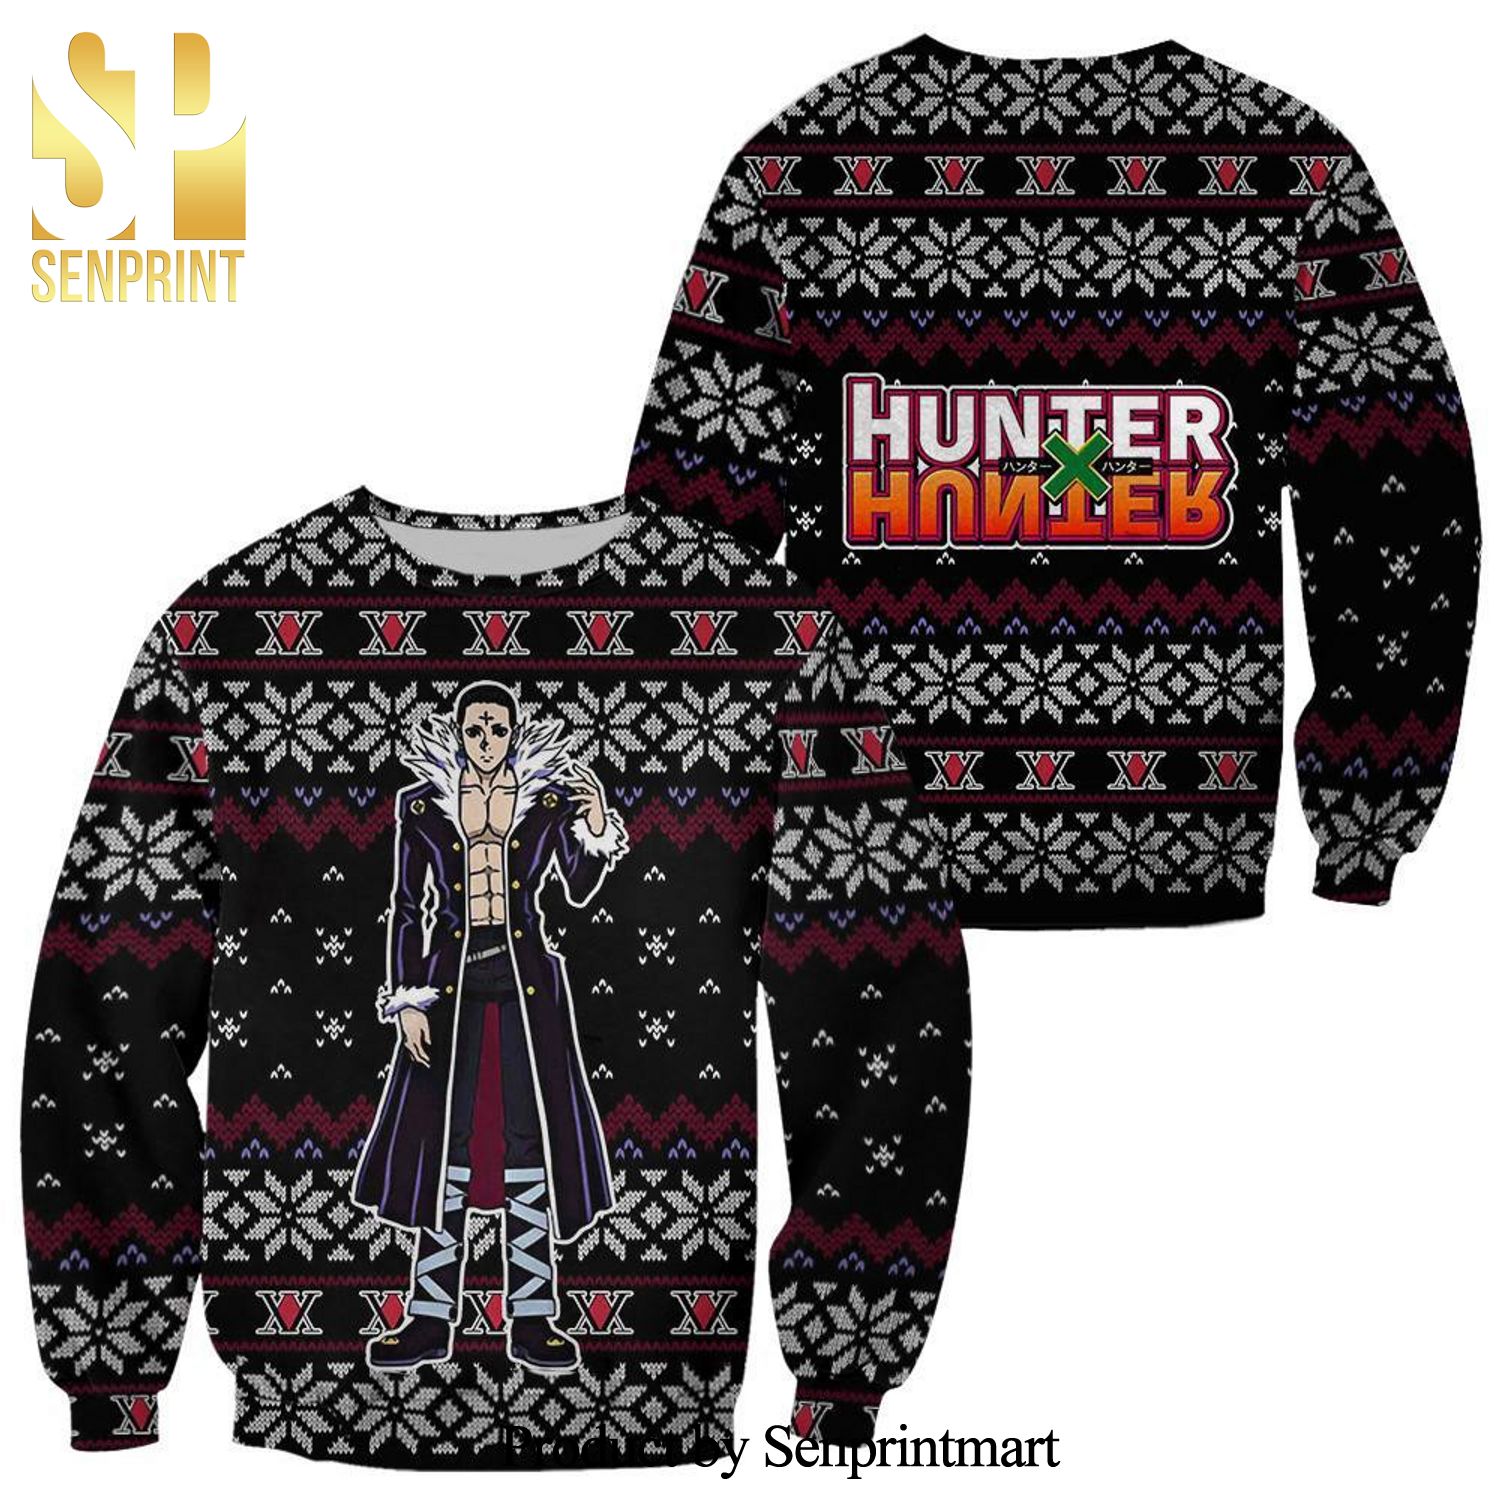 Chrollo Lucilfer Hunter X Hunter Knitted Ugly Christmas Sweater